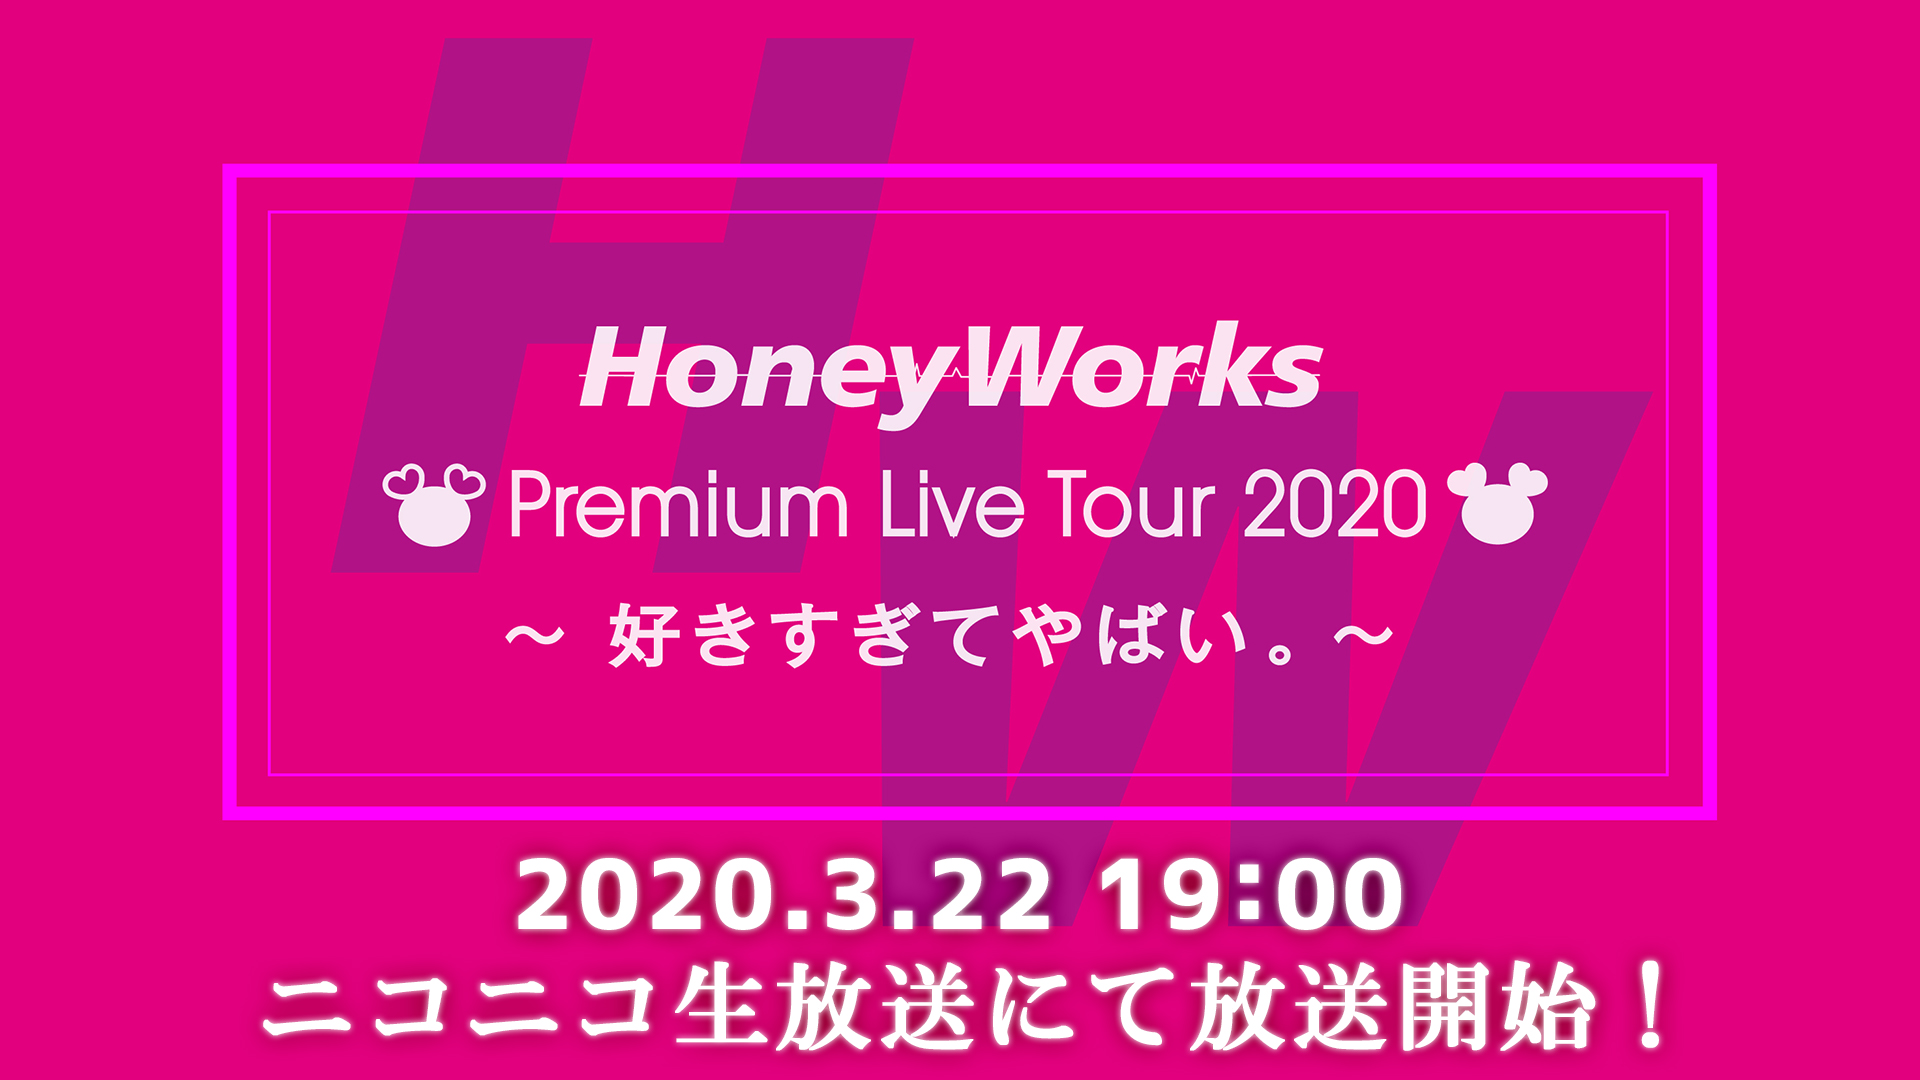 Honeyworks Premium Live Tour 好きすぎてやばい 無観客ライブ ニコニコ生放送にて有料配信決定 News Honeyworks Official Web Site